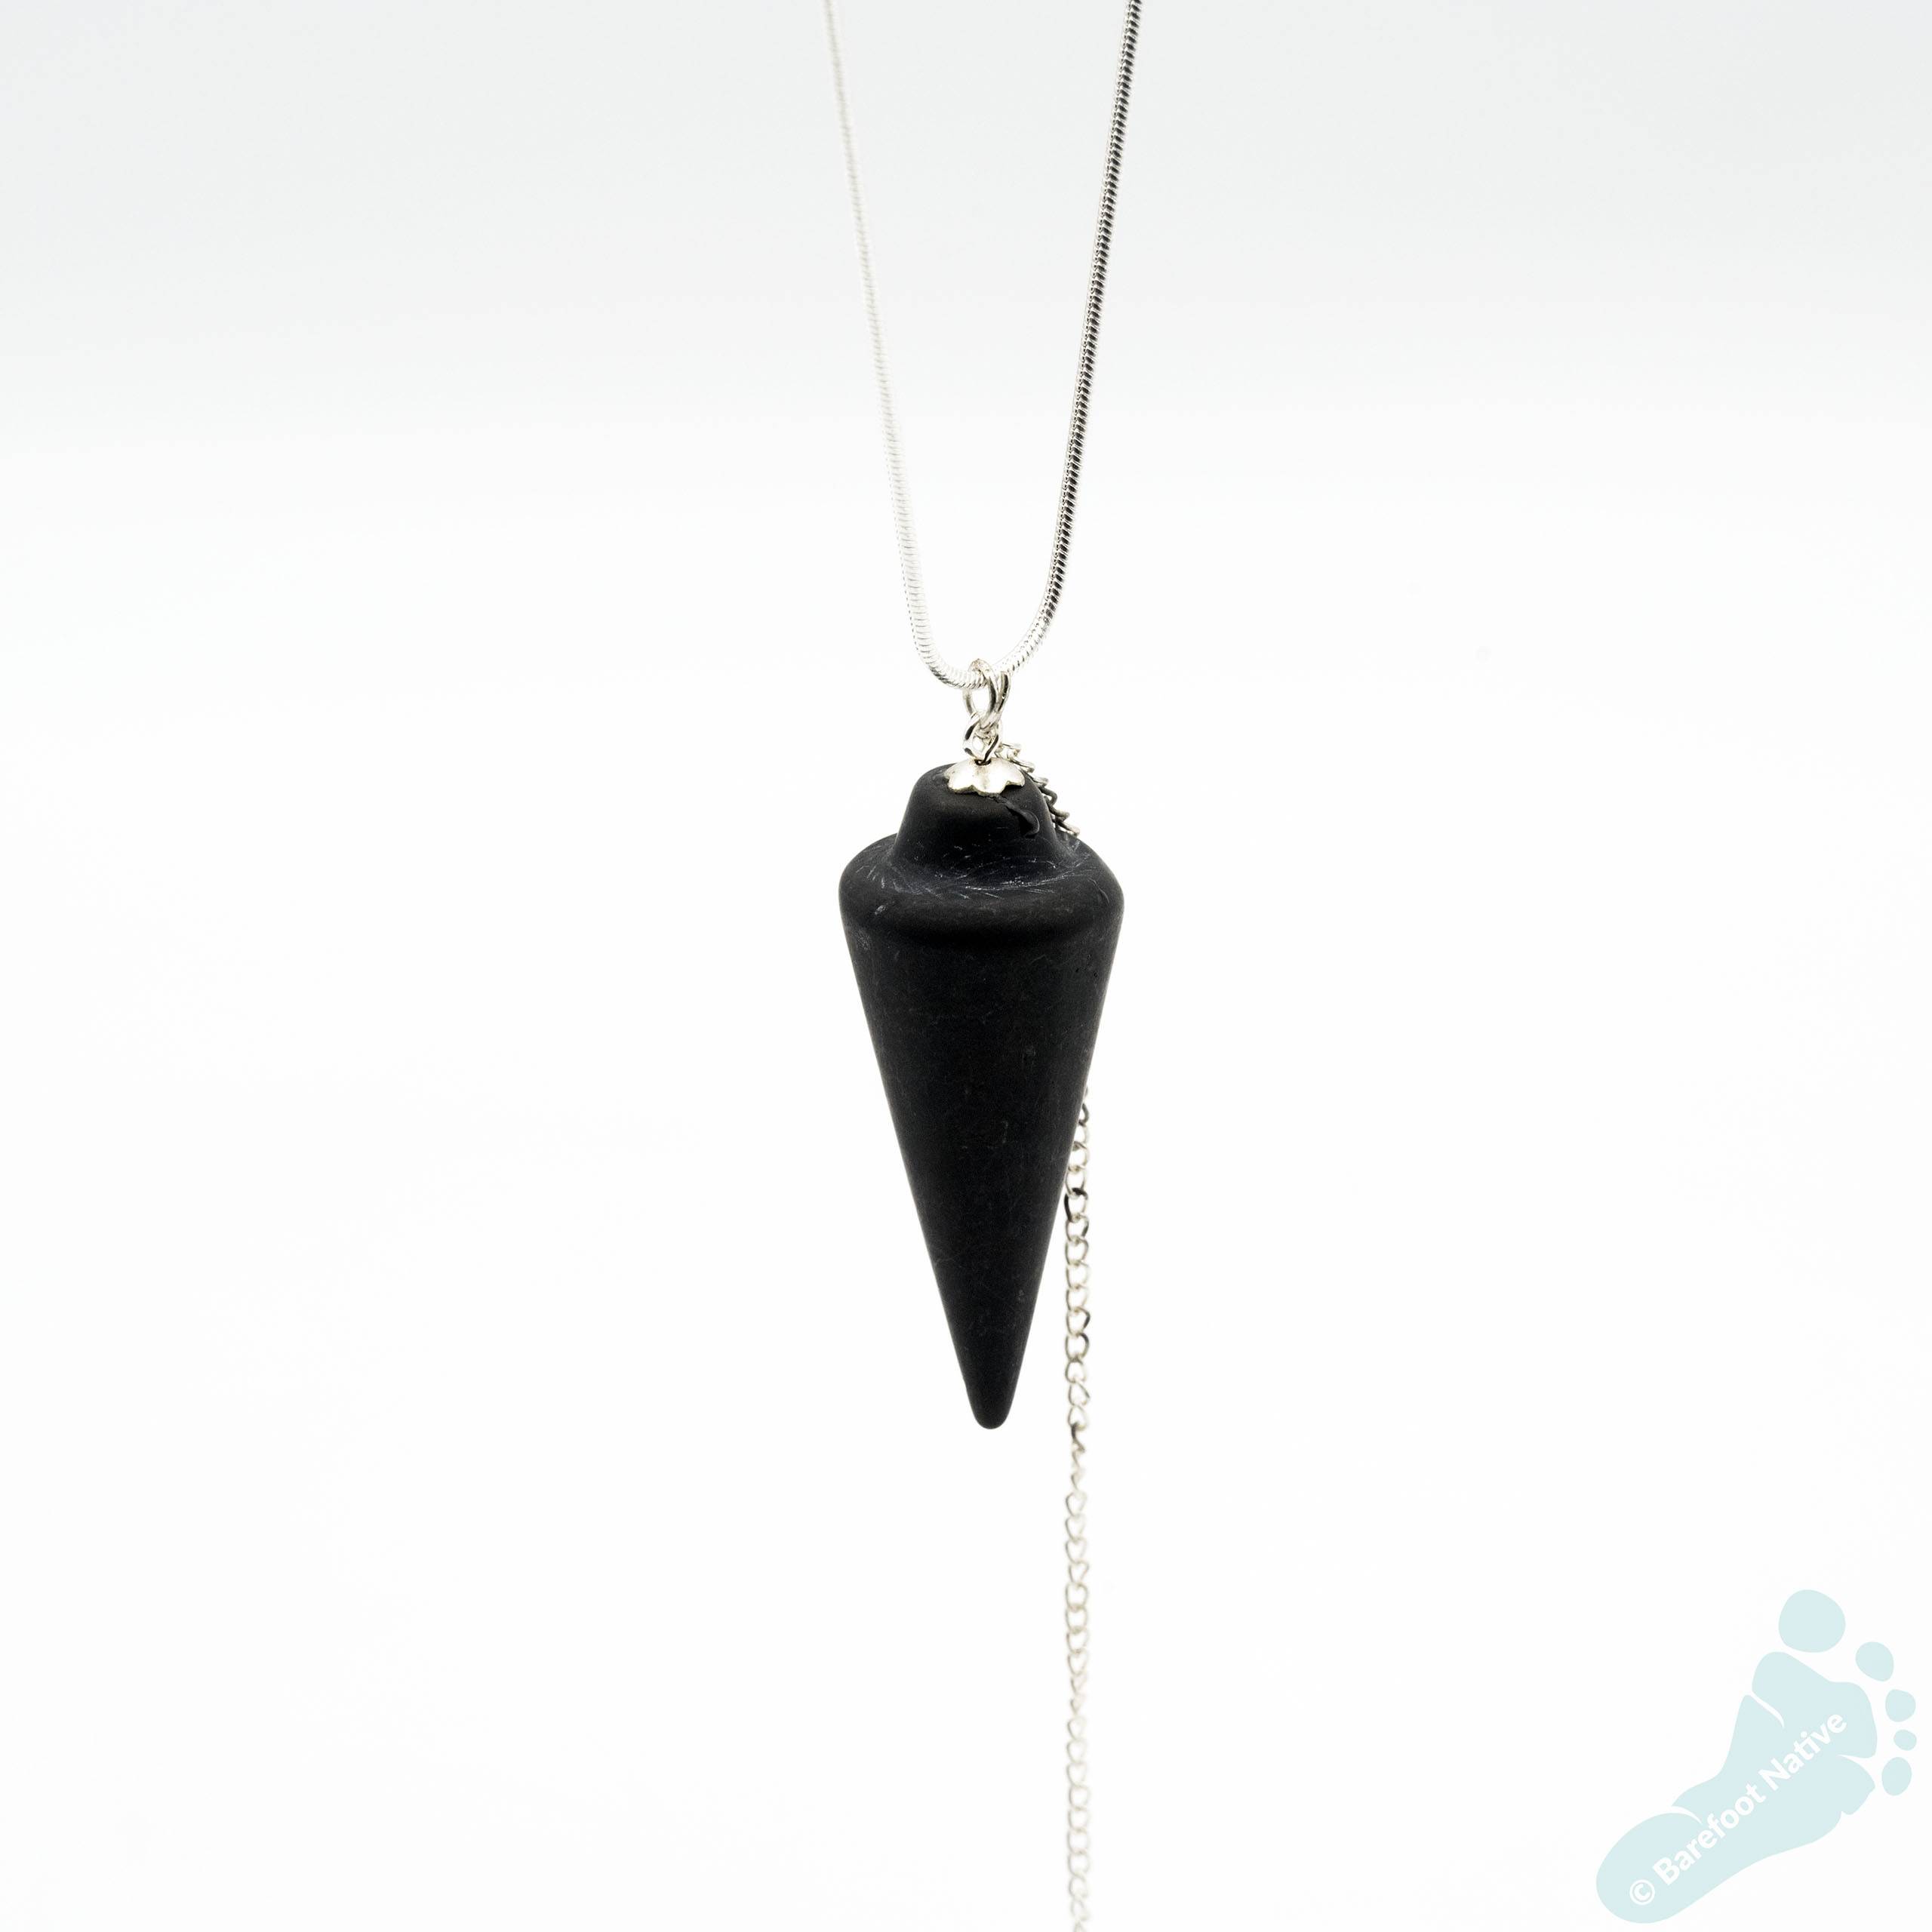 Shungite Pendulum with Chained Charm Pendant